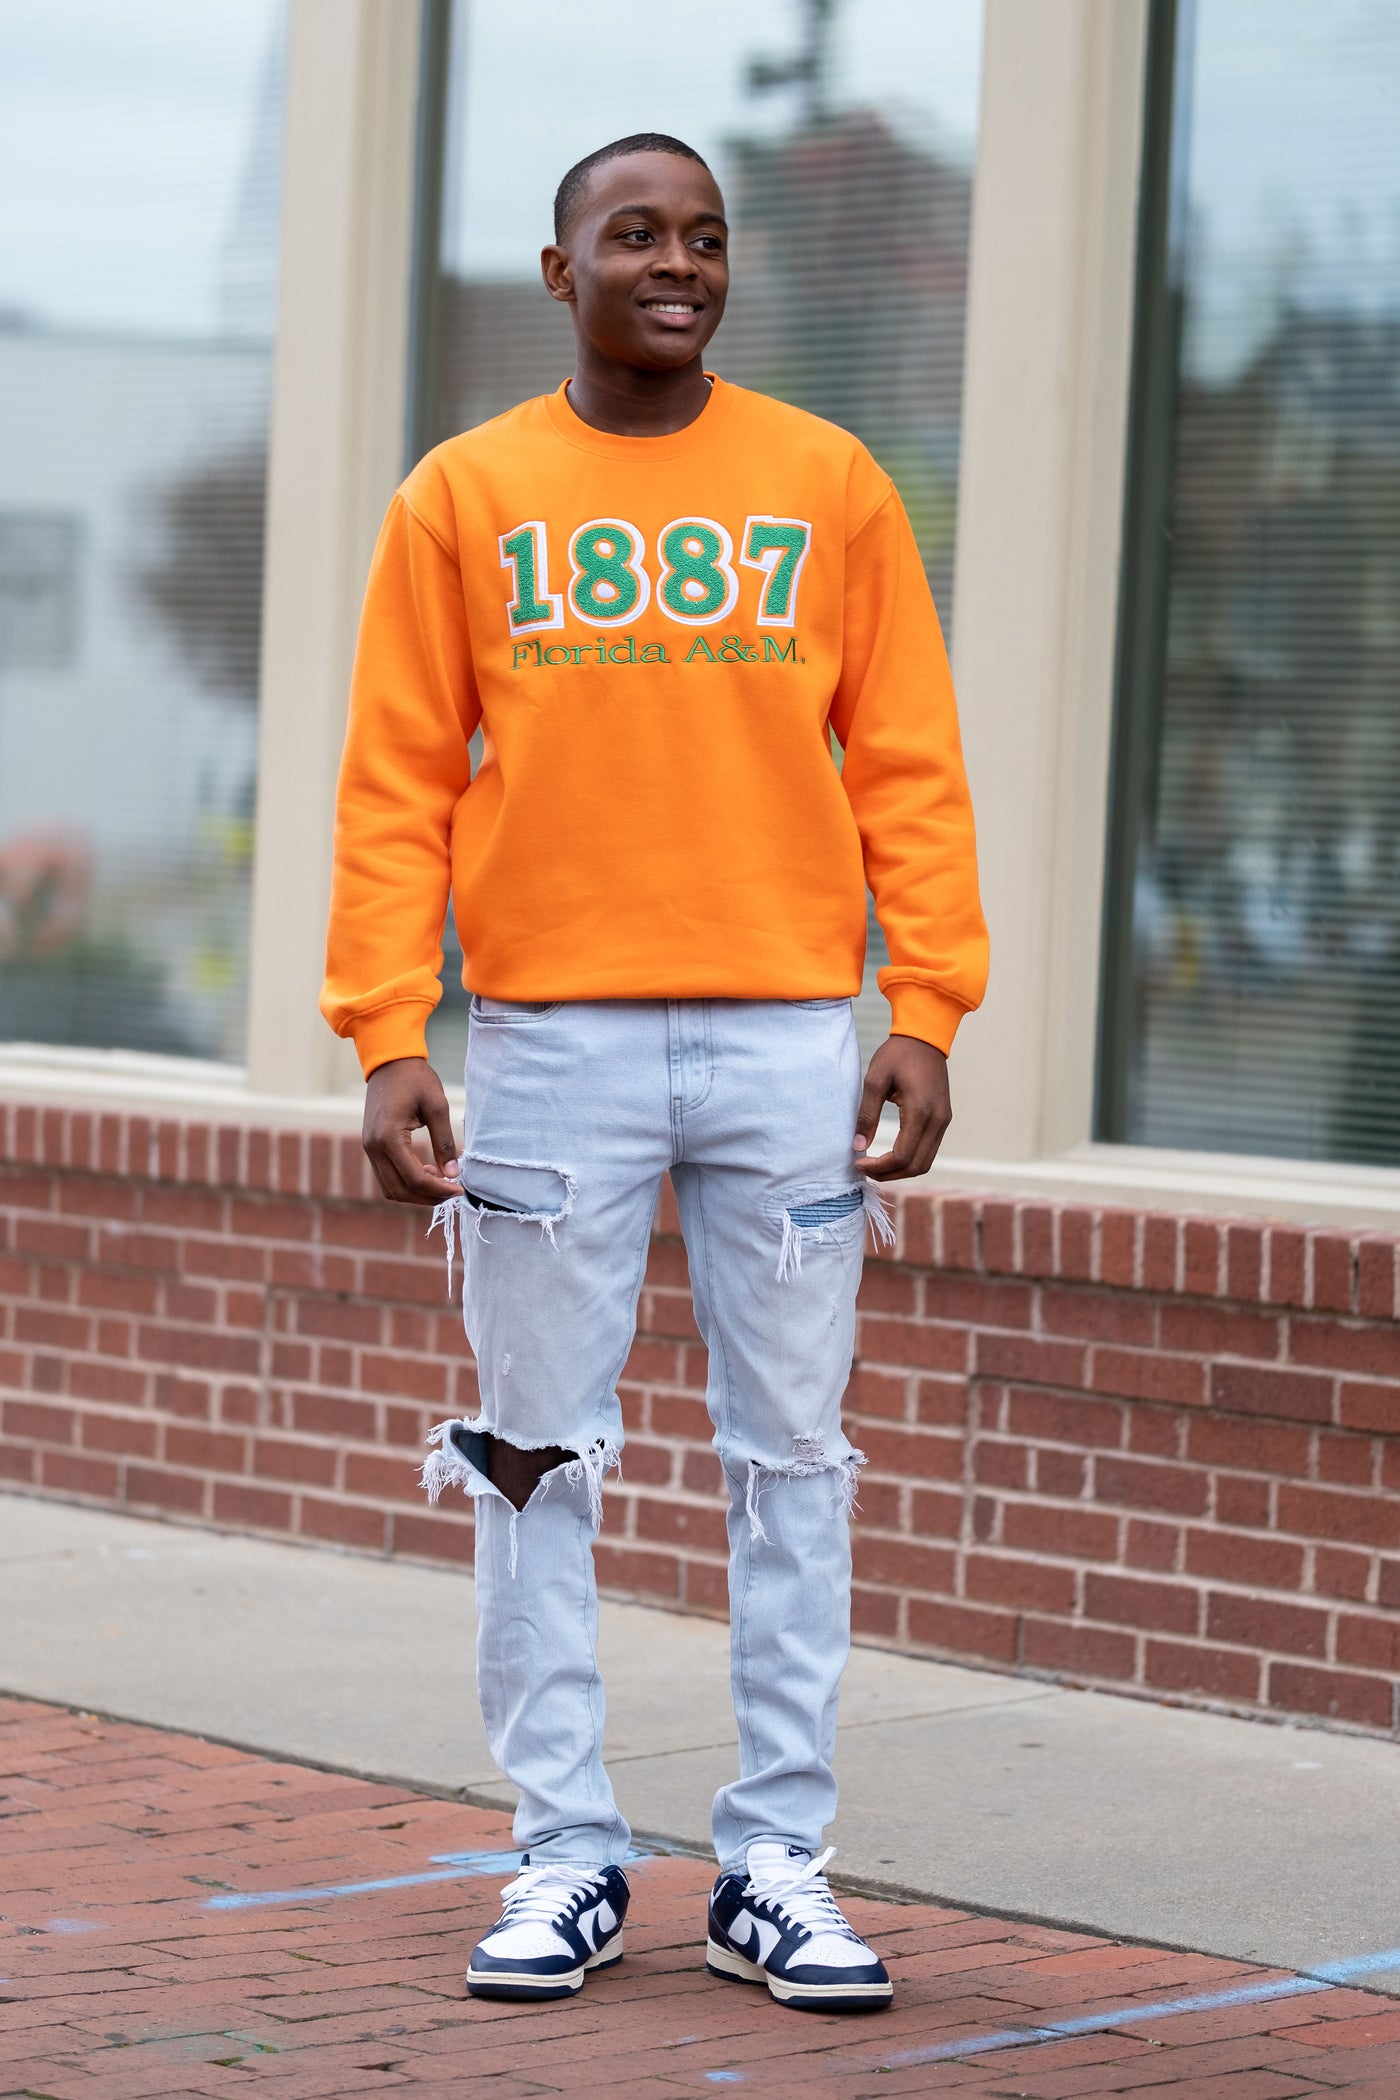 1887 Florida A&M Sweatshirt (Unisex) – Your HBCU